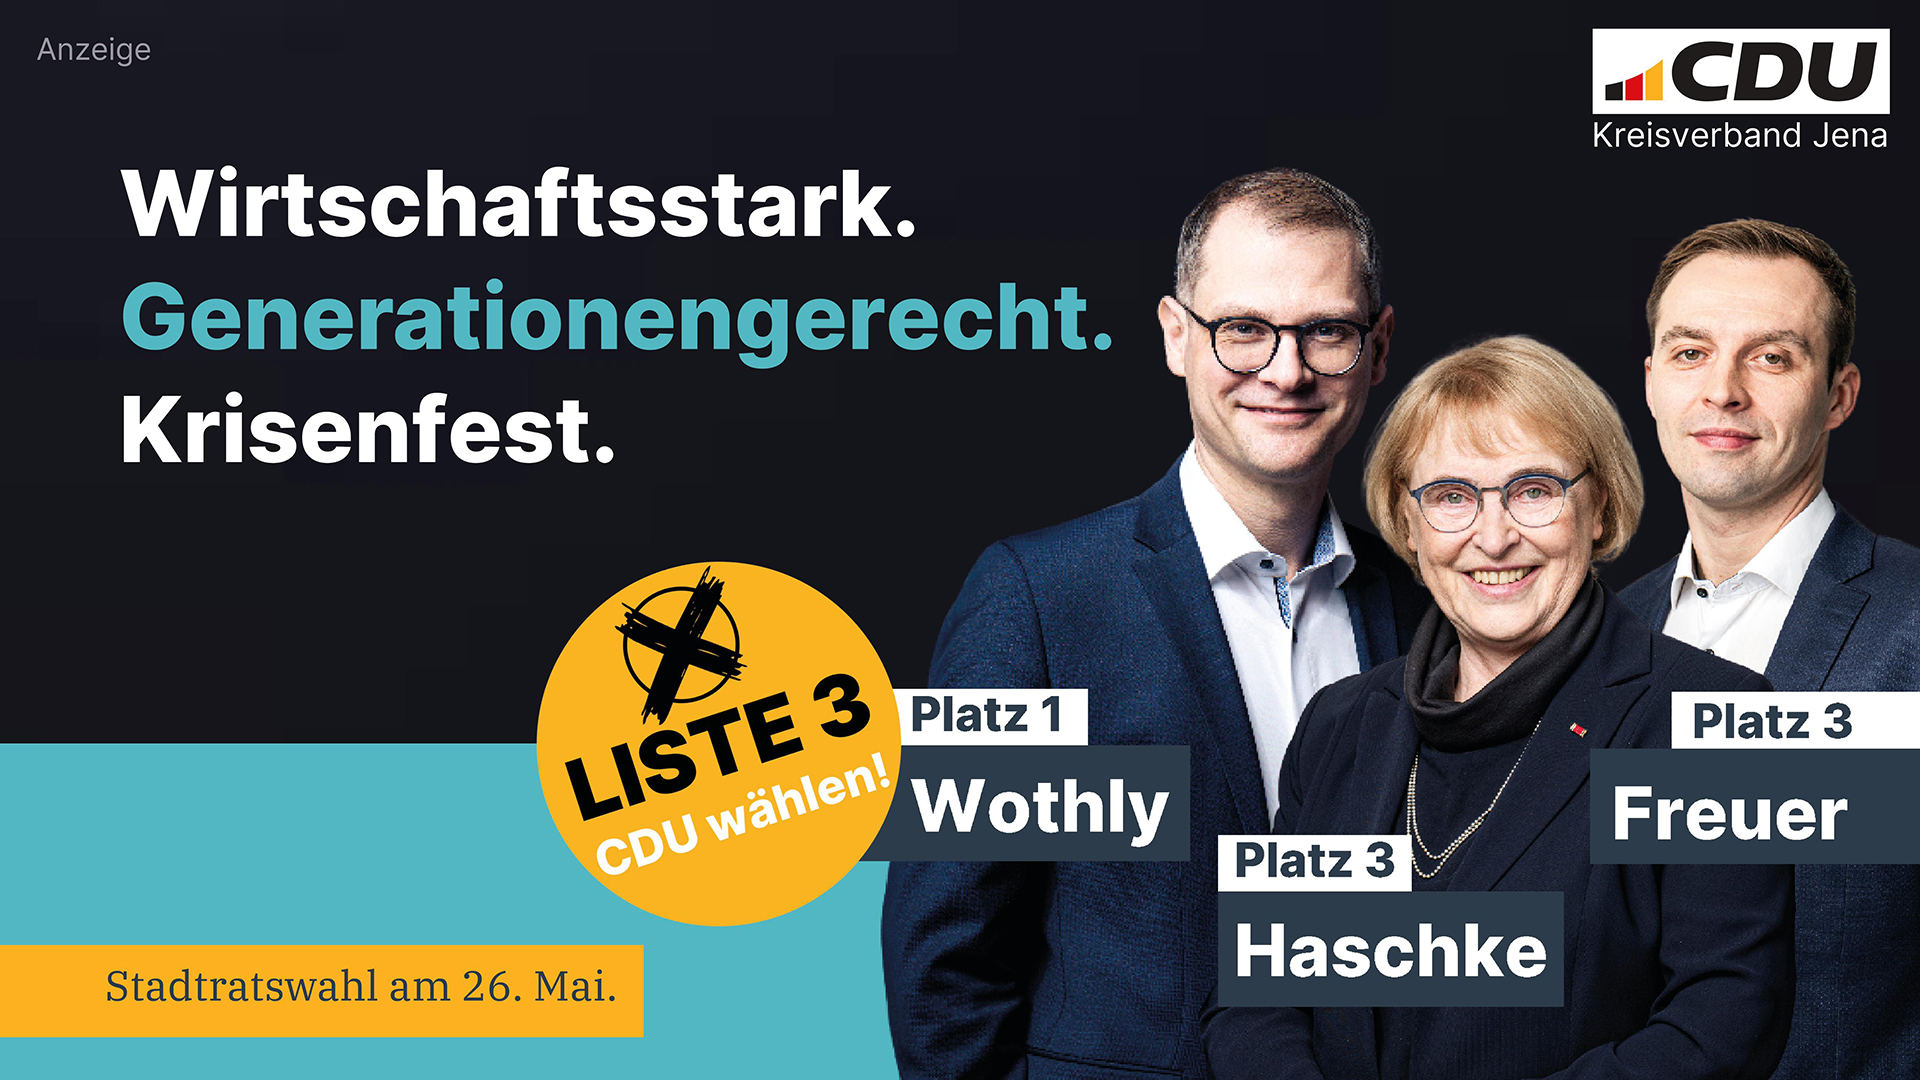 CDU Jena_Wahlwerbung_Wothly_Haschke_Freuer